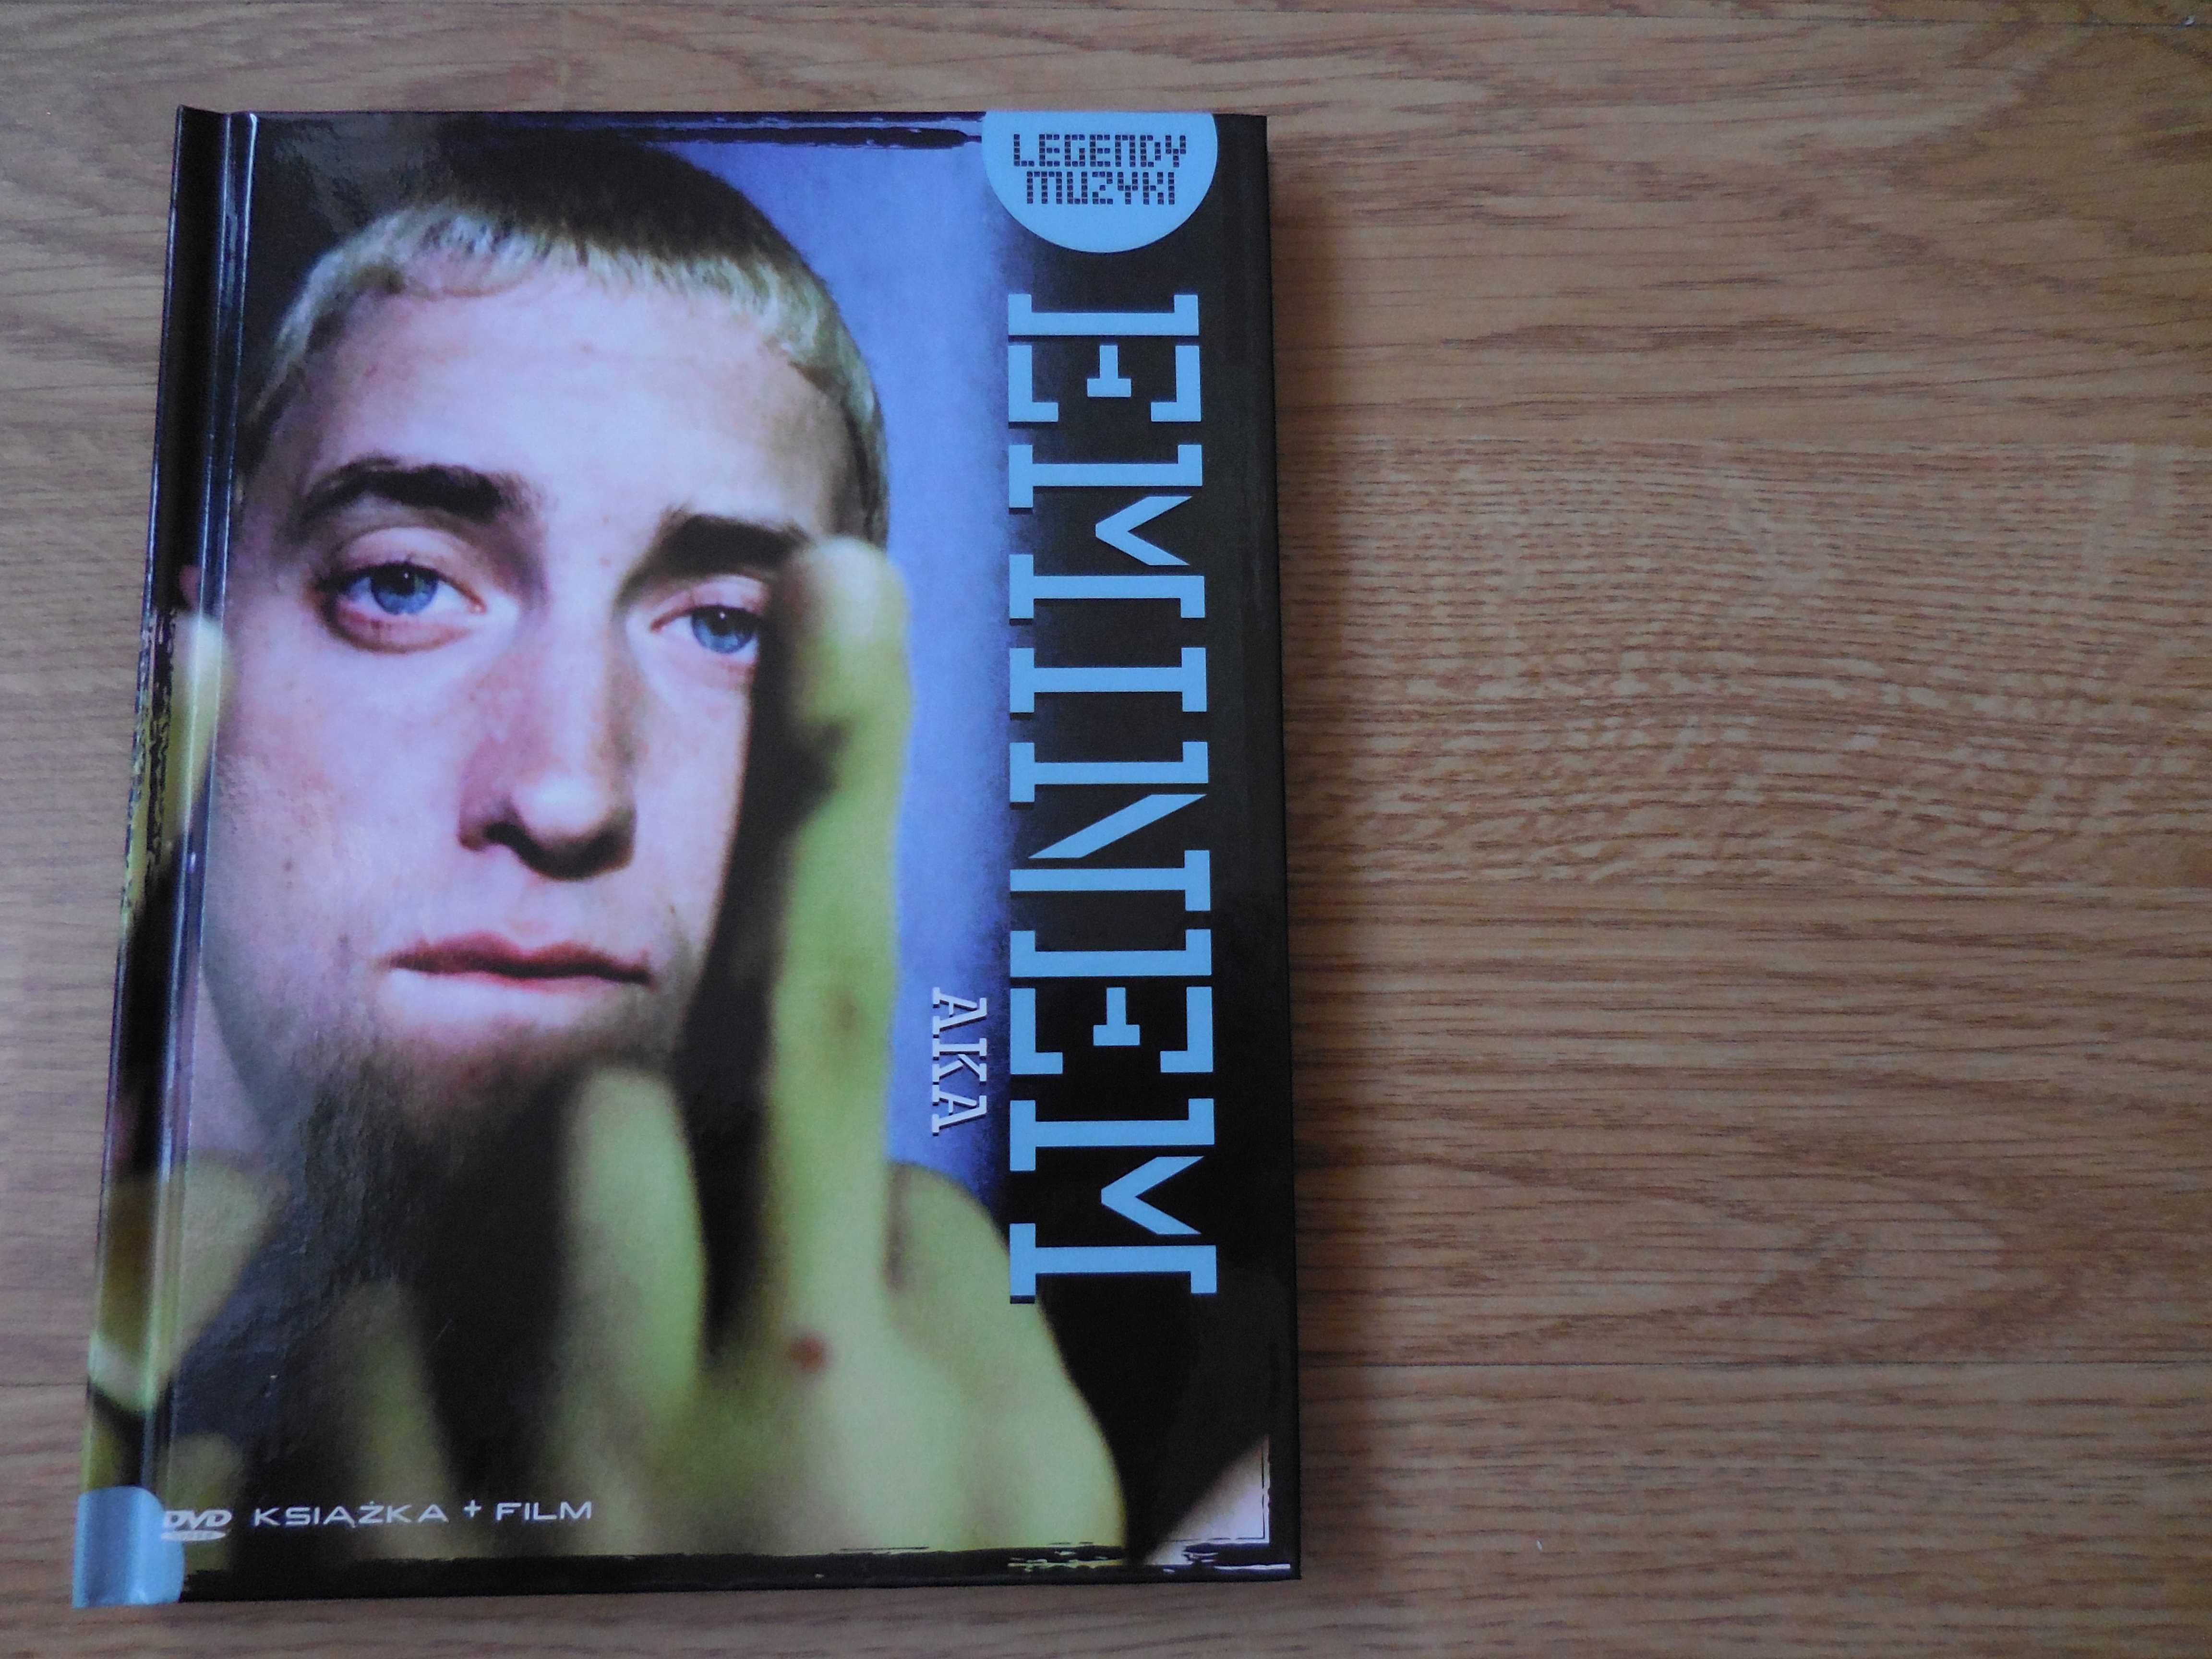 MUZYKA 'Legendy muzyki Eminem'